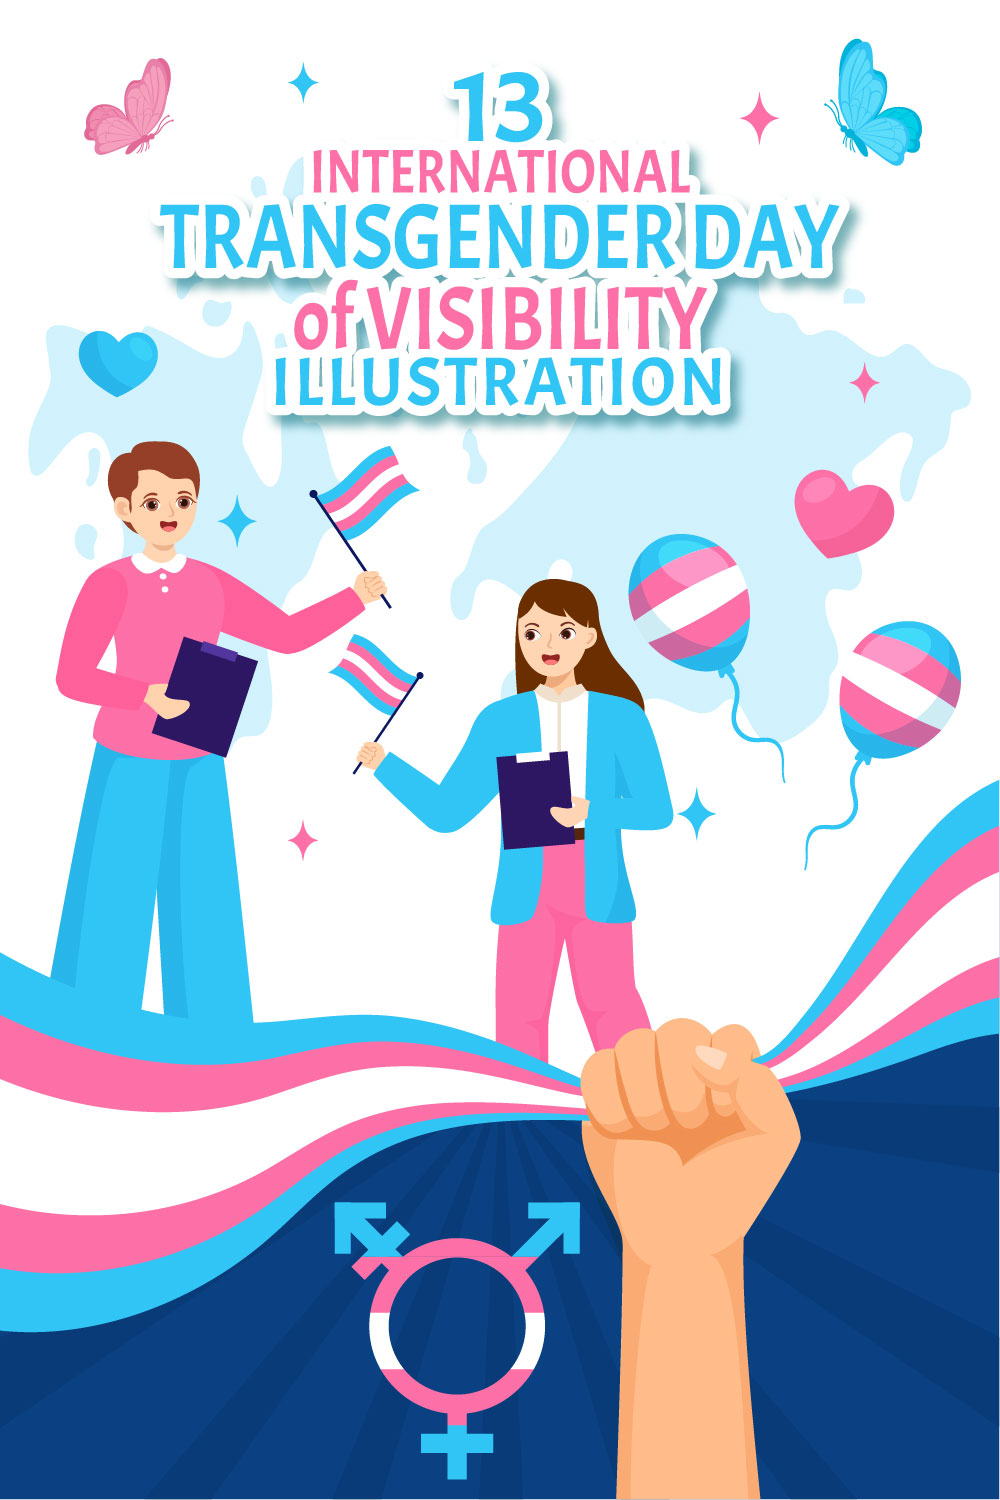 13 International Transgender Day of Visibility Illustration pinterest preview image.